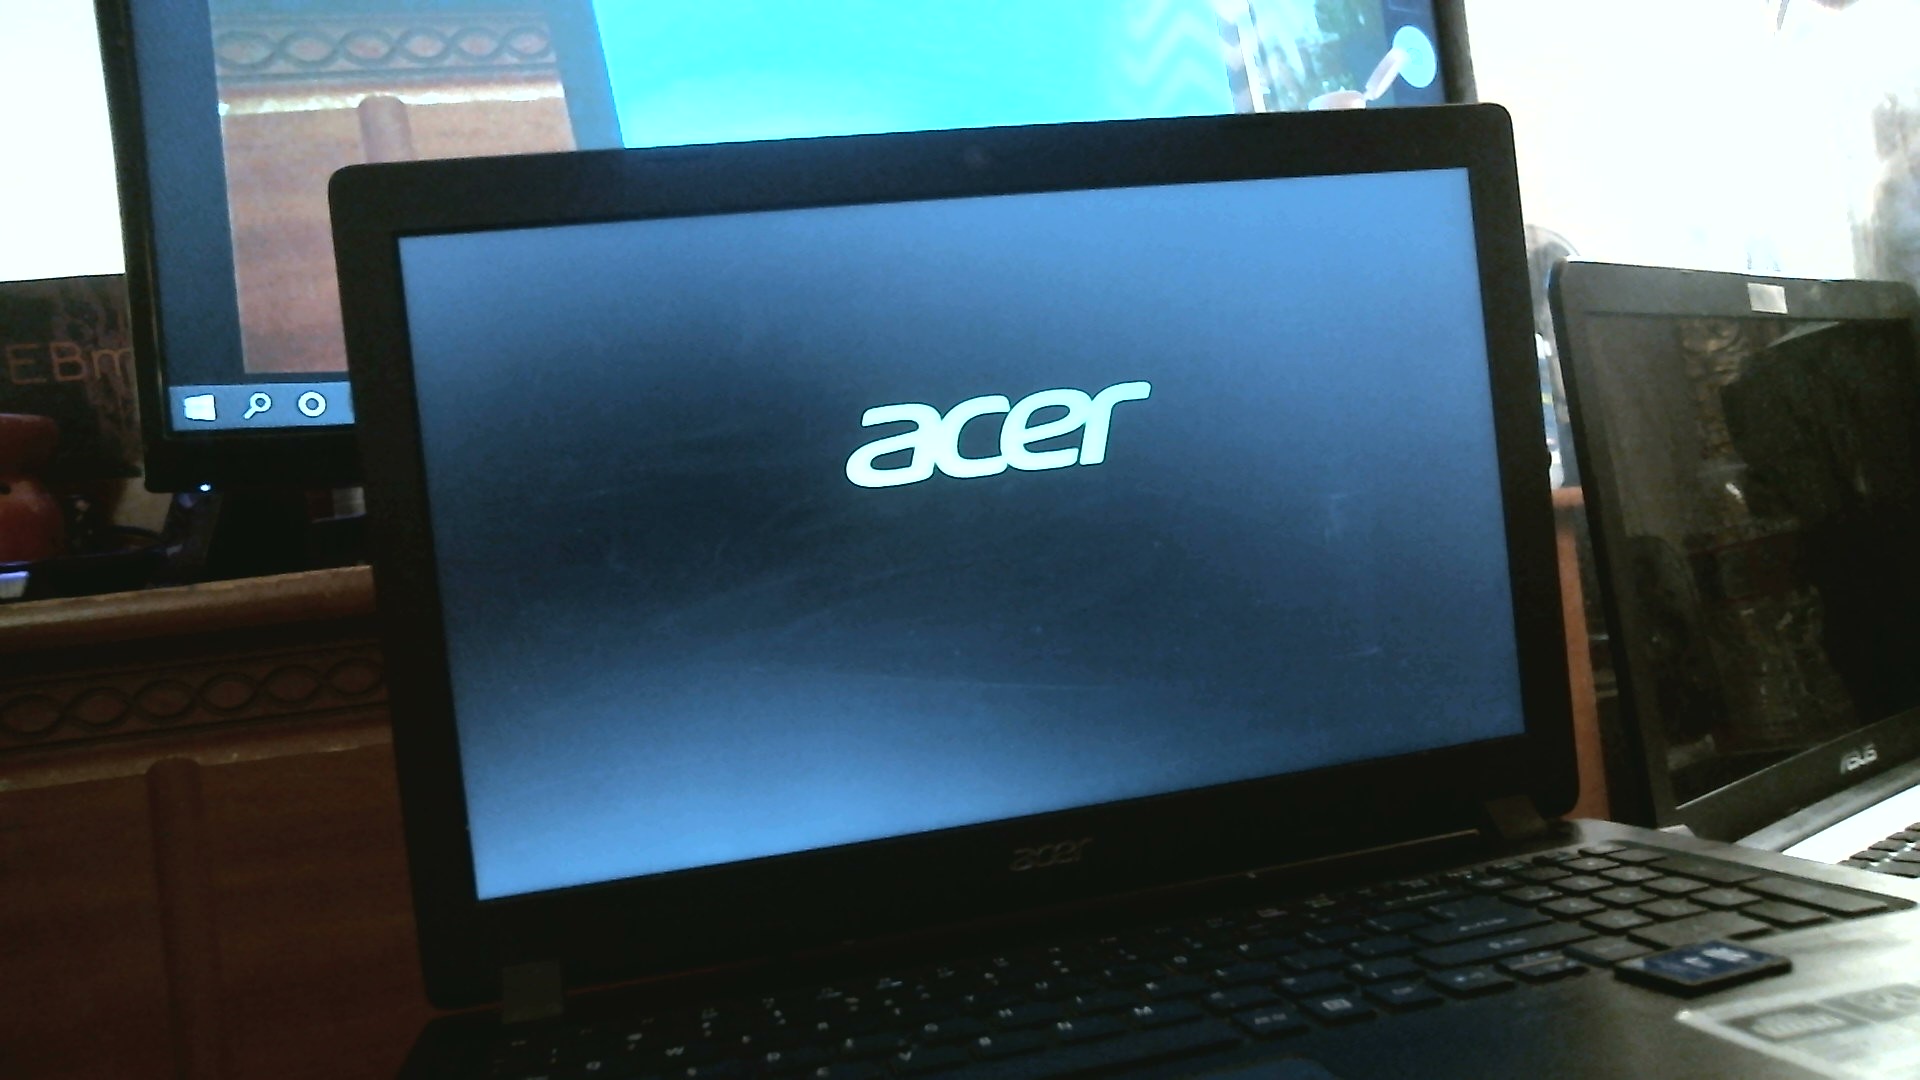 after Windows updates were interrupted my Acer AspireA315-21 wont boot past the logo screen e37cf38f-4070-4422-8f79-8ab0ed499271?upload=true.jpg